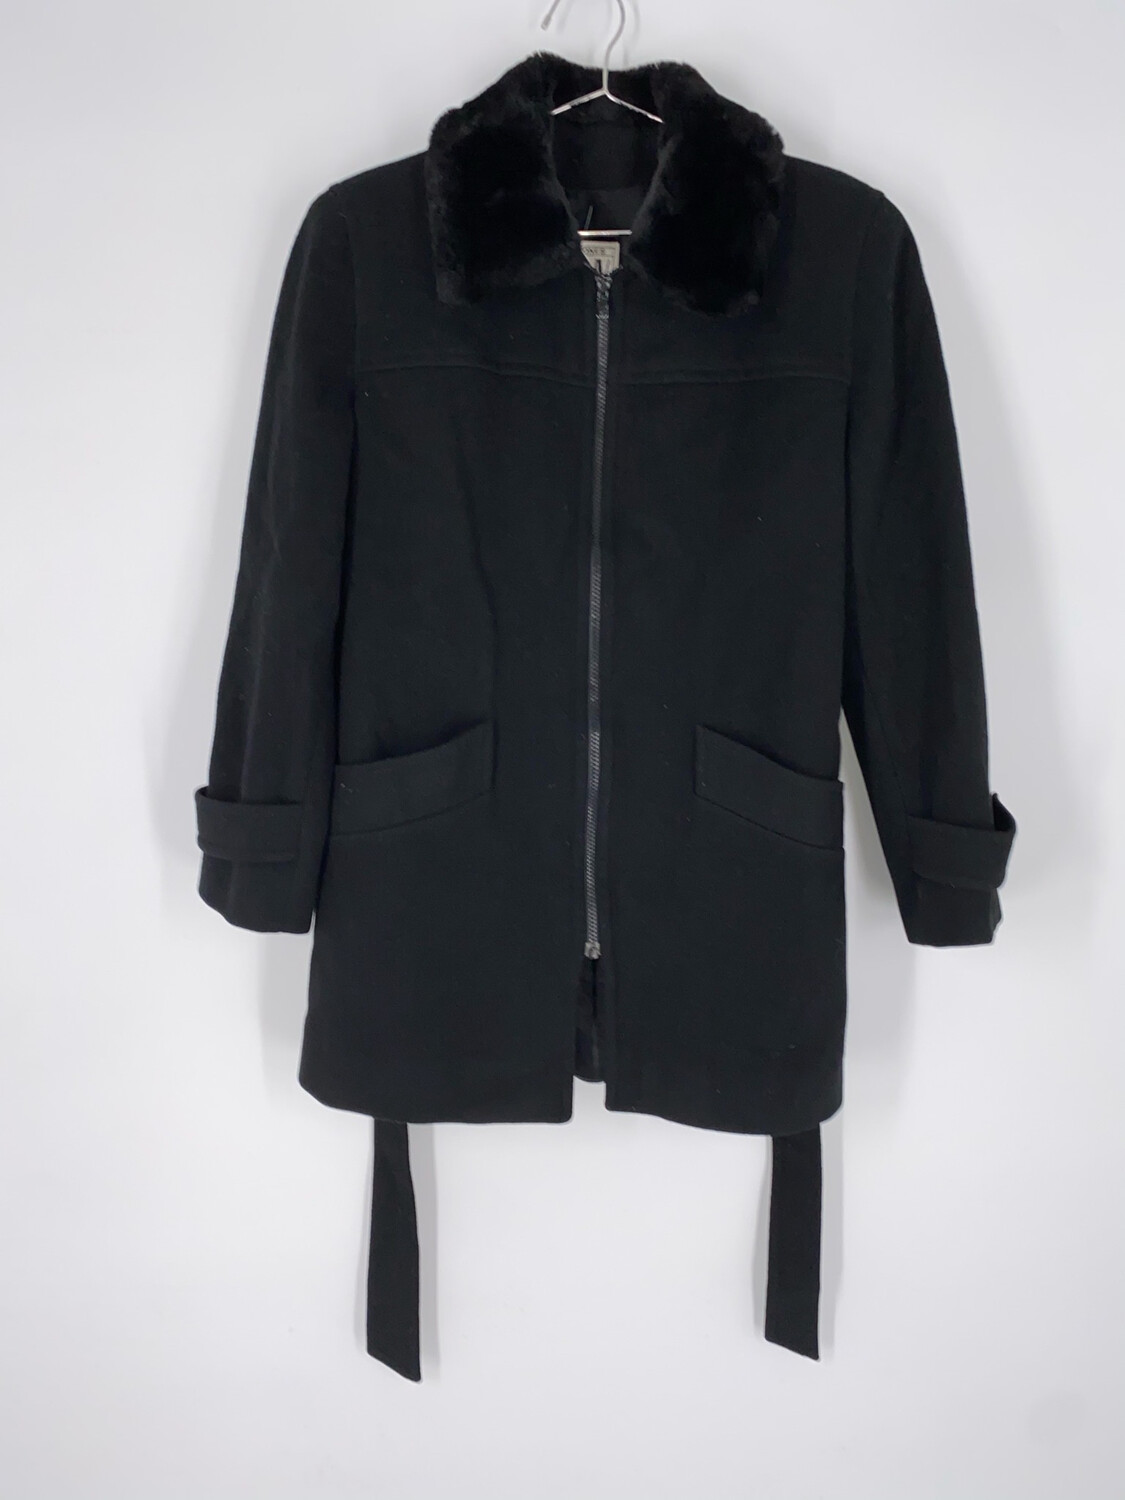 Jones New York Black Wool Coat Faux Fur Collar Size M